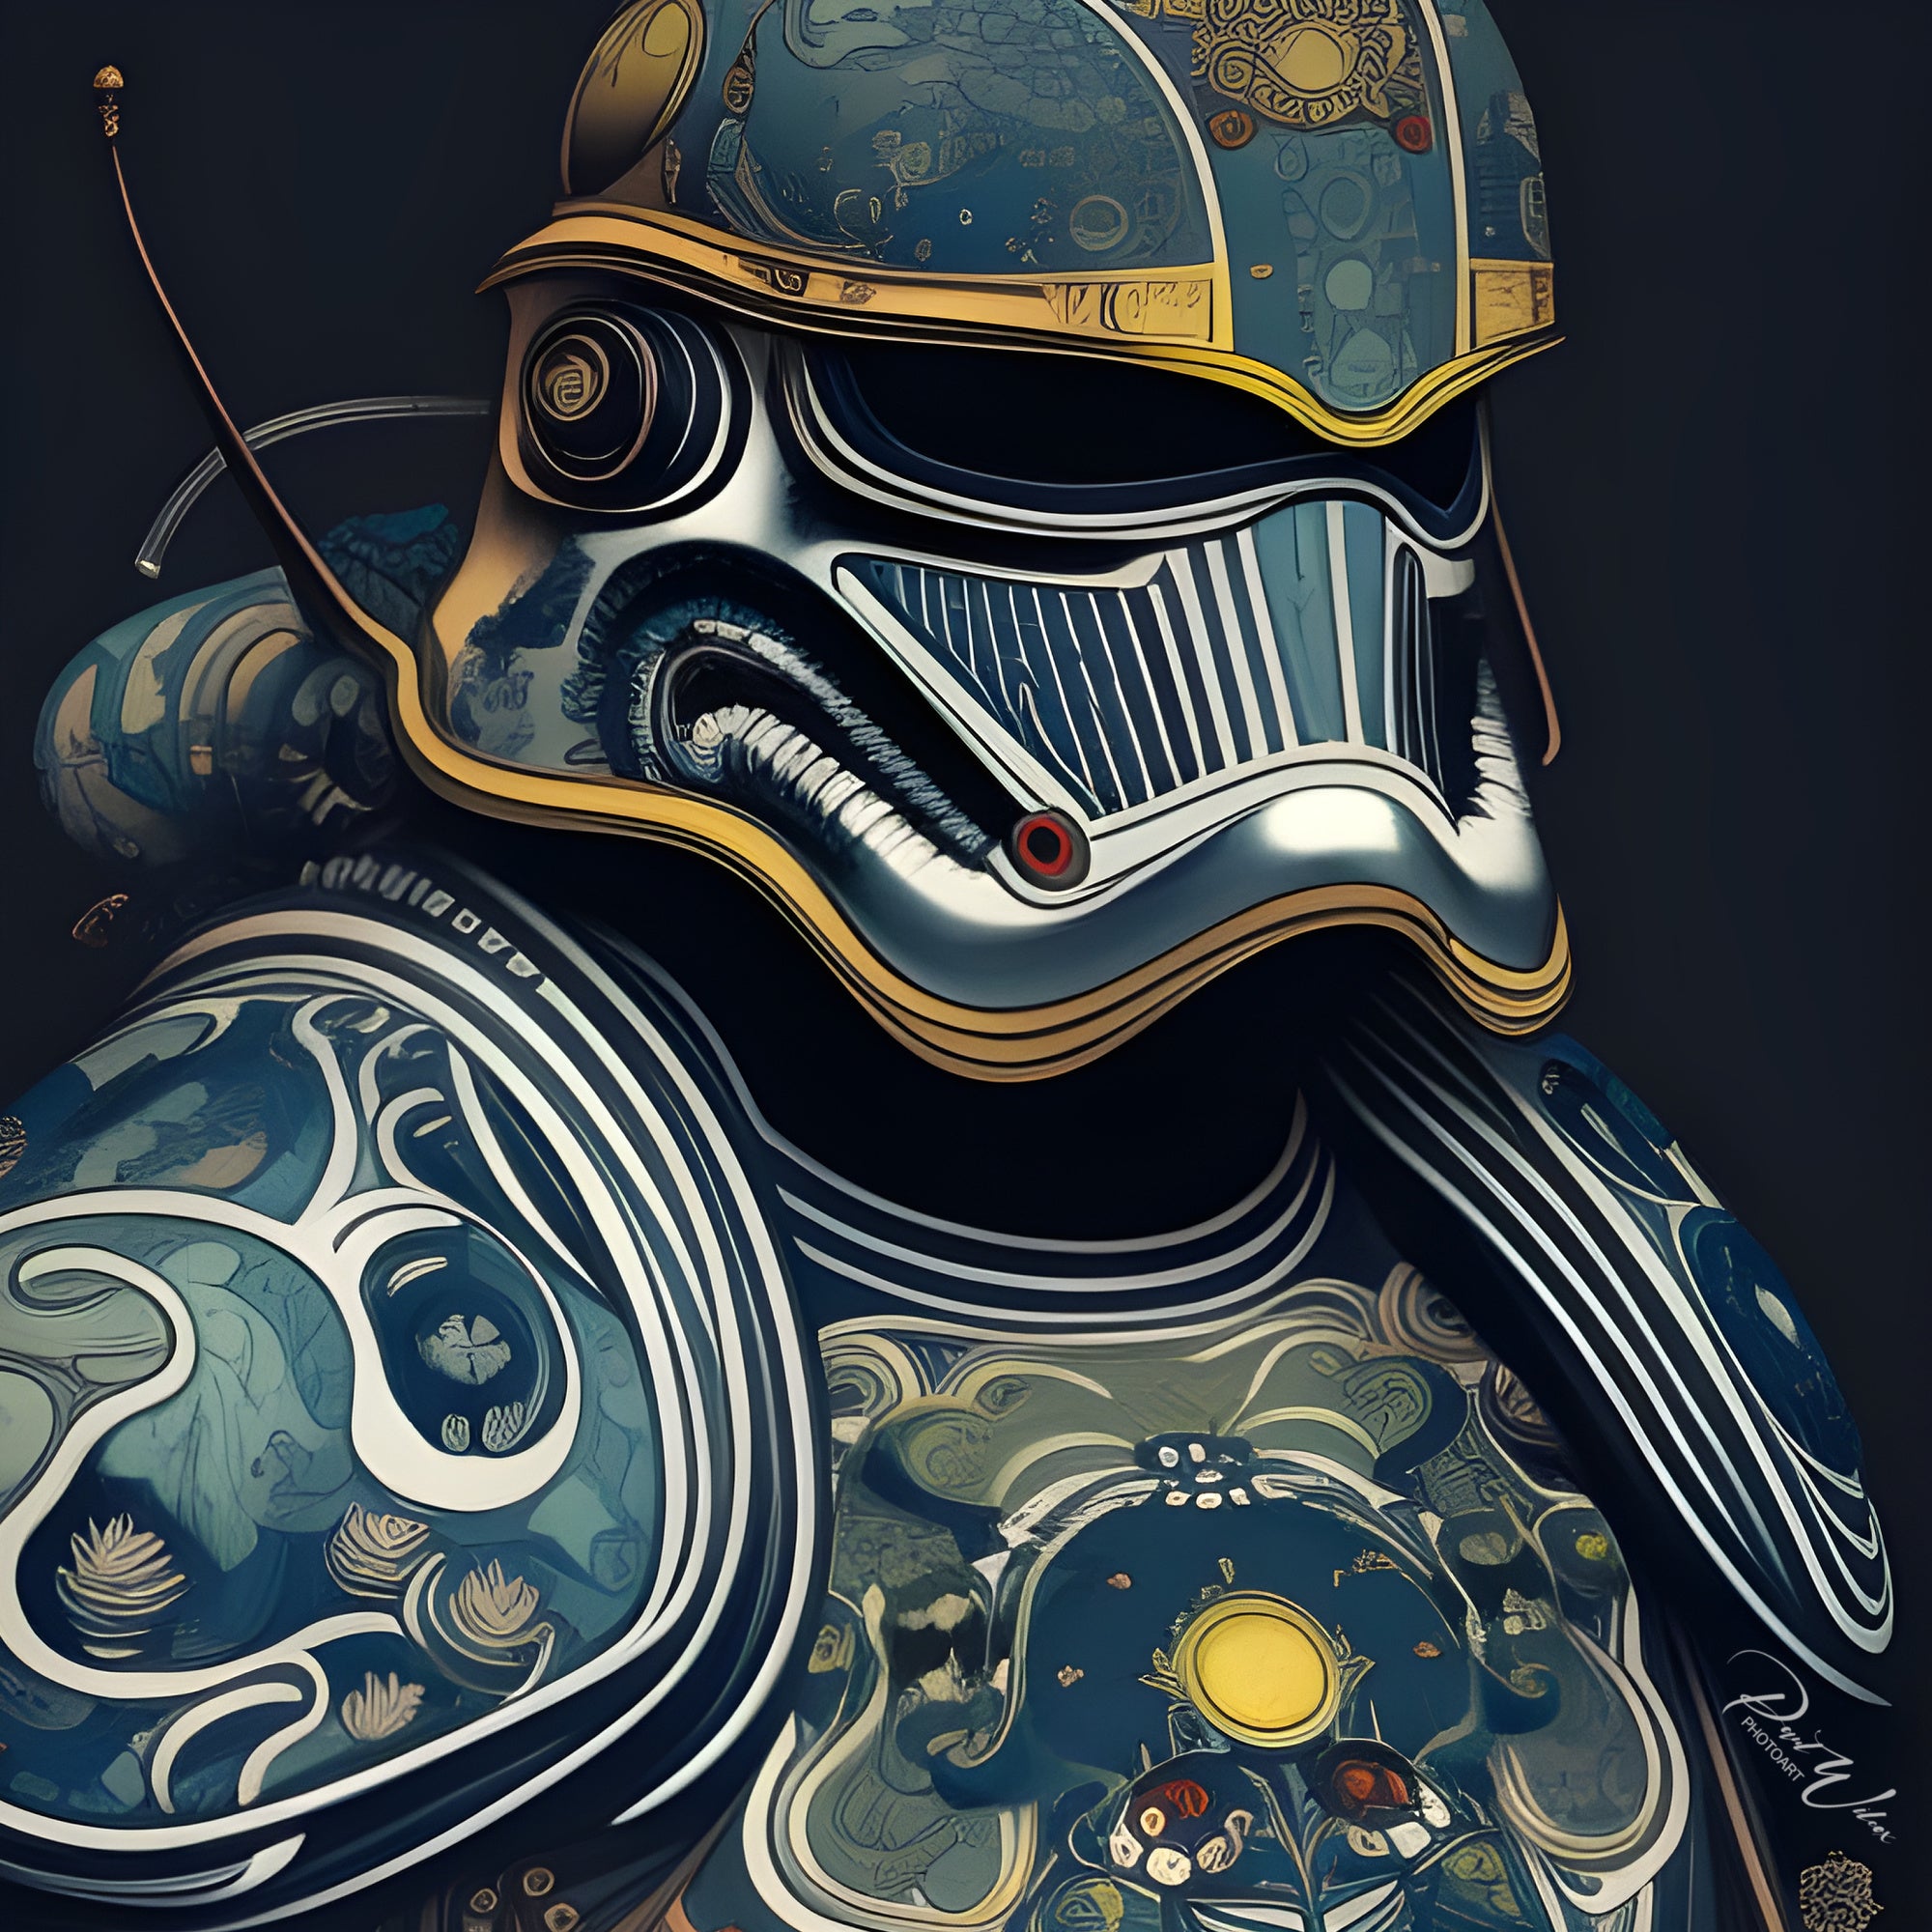 Storm Trooper - Image